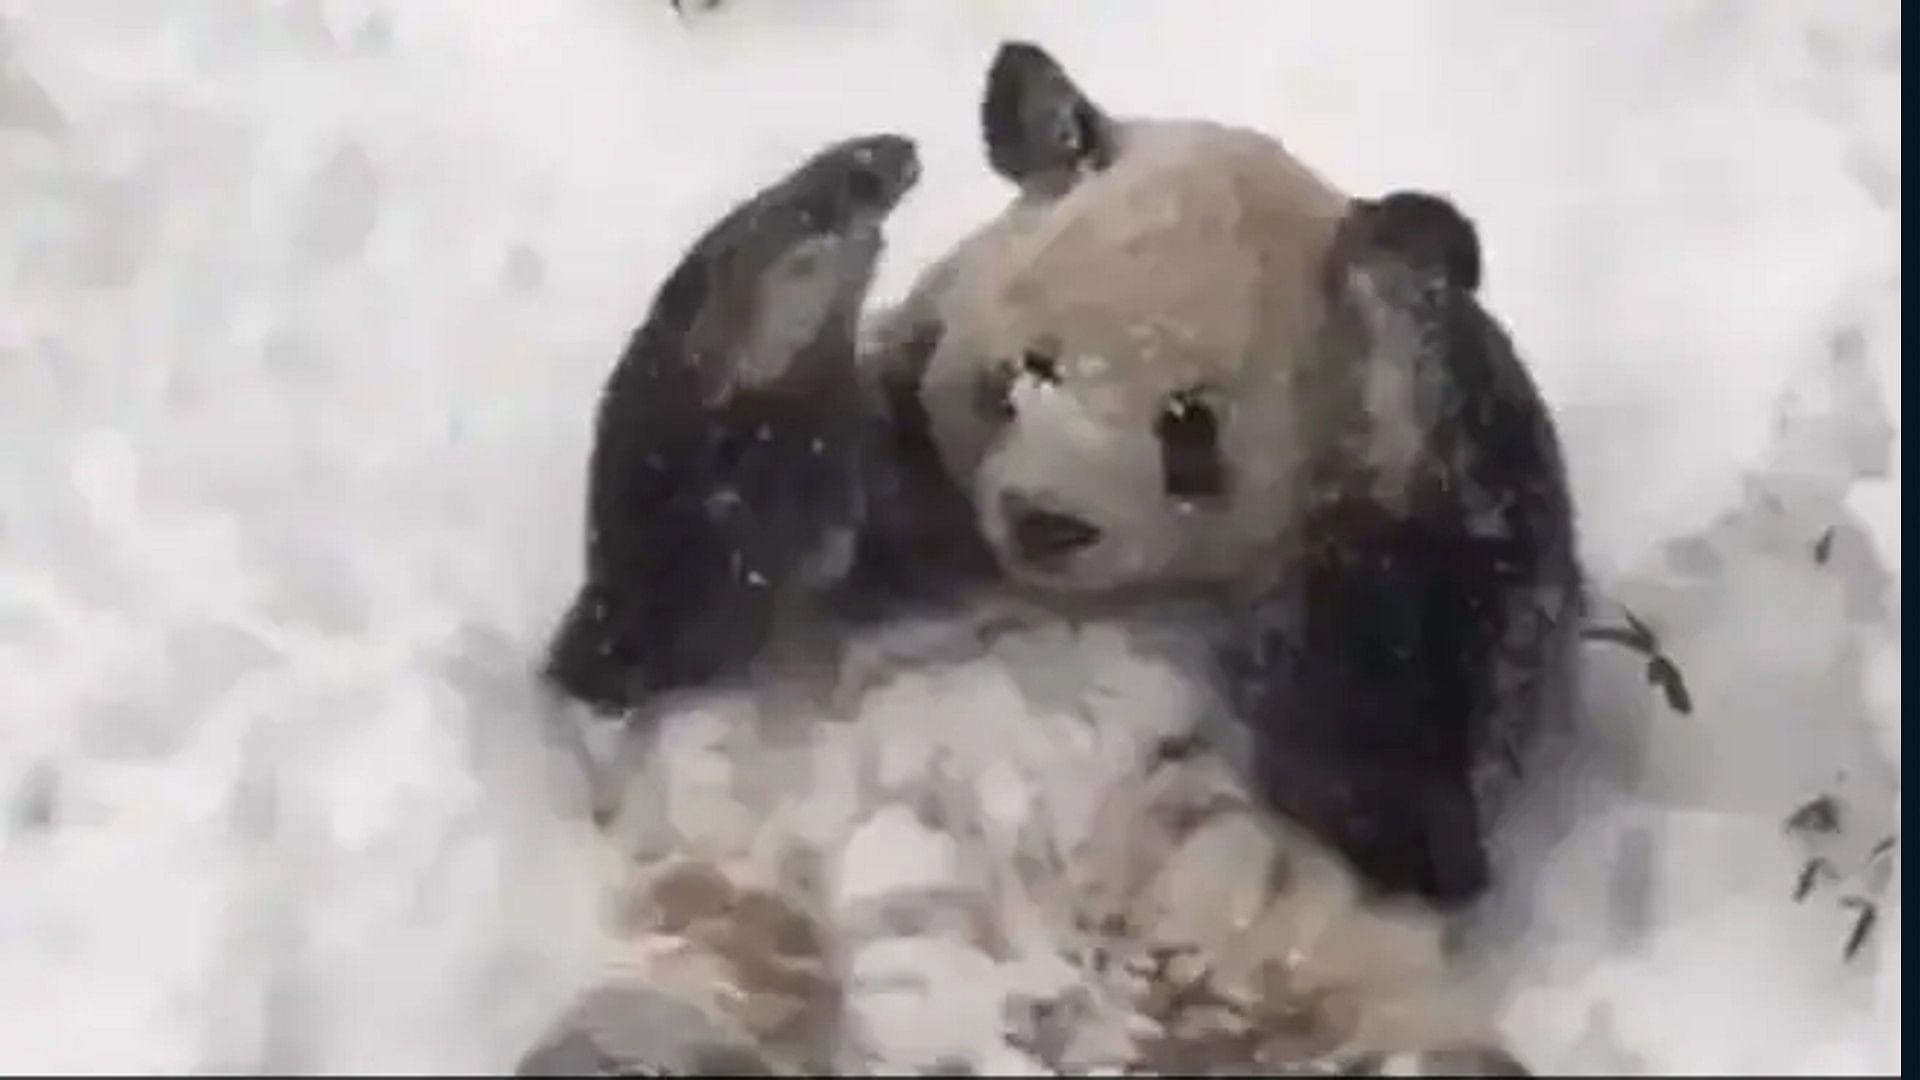 Cute Panda Video: Panda playing and having fun in the snow won the hearts of people